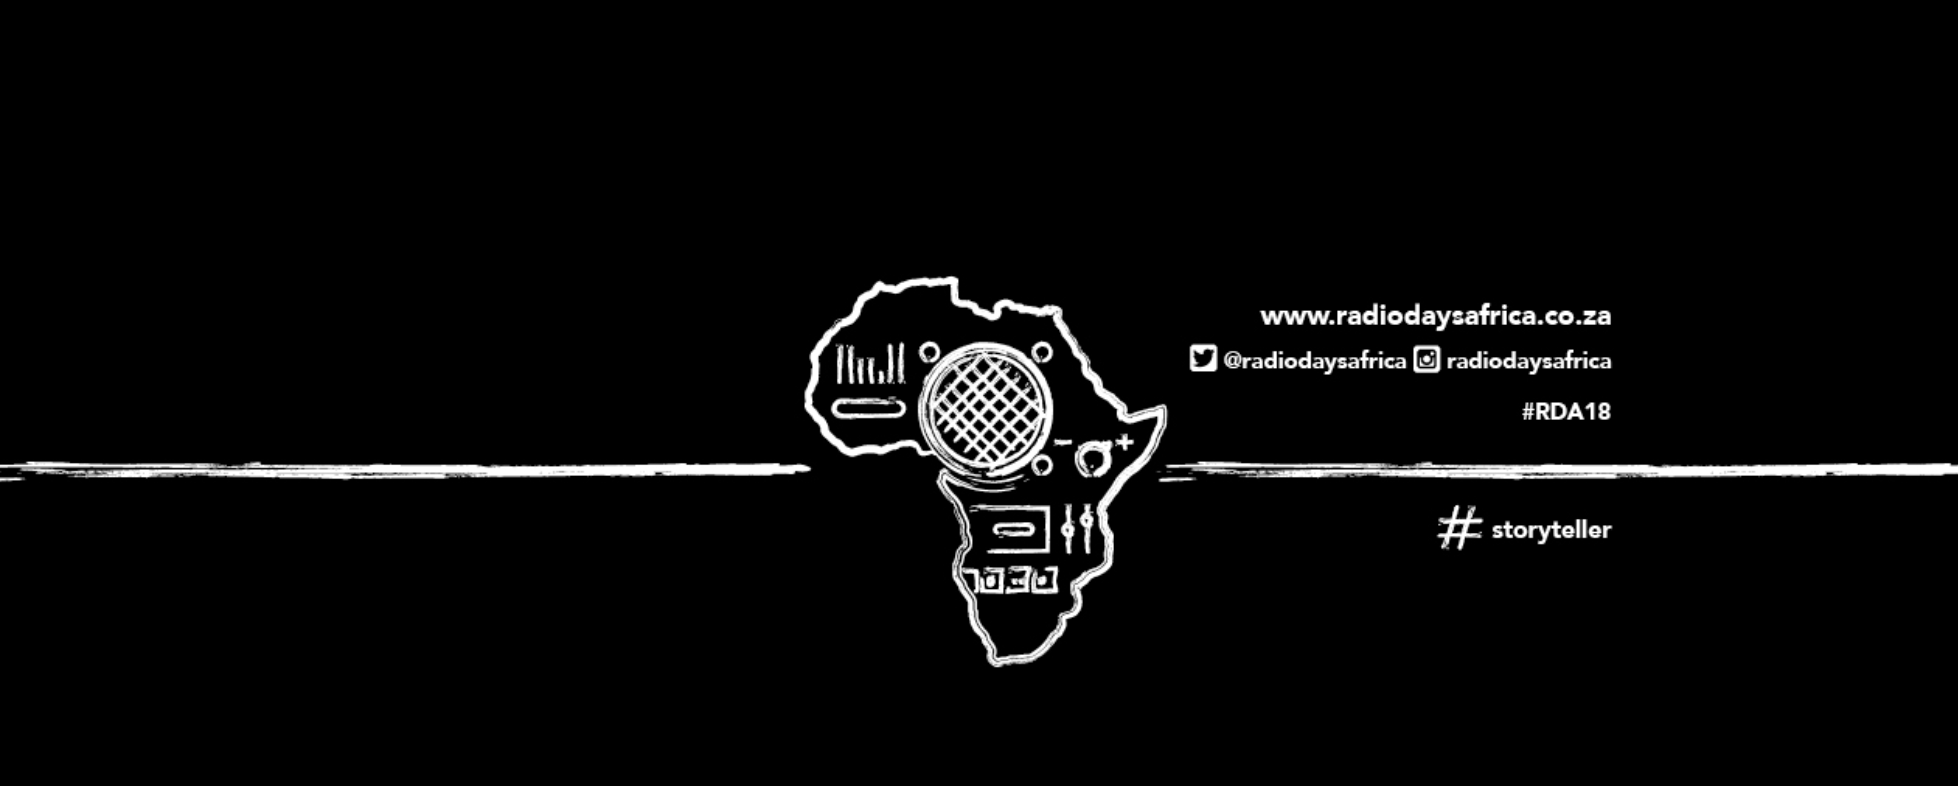 Des RadioDays Africa à Johannesburg du 3 au 6 juillet 2018